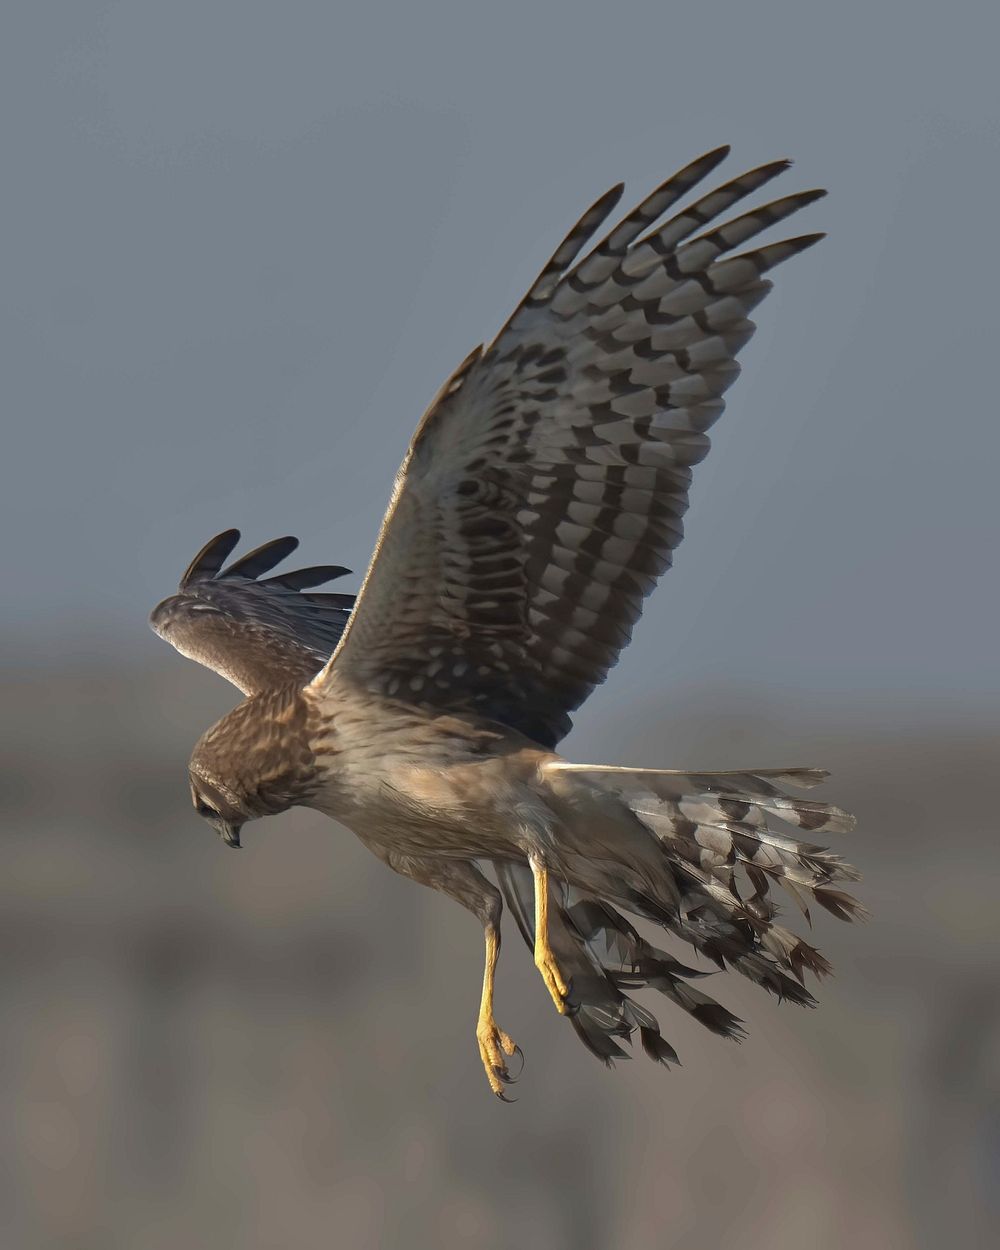 Free falcon flying in blue sky photo, public domain animal CC0 image.